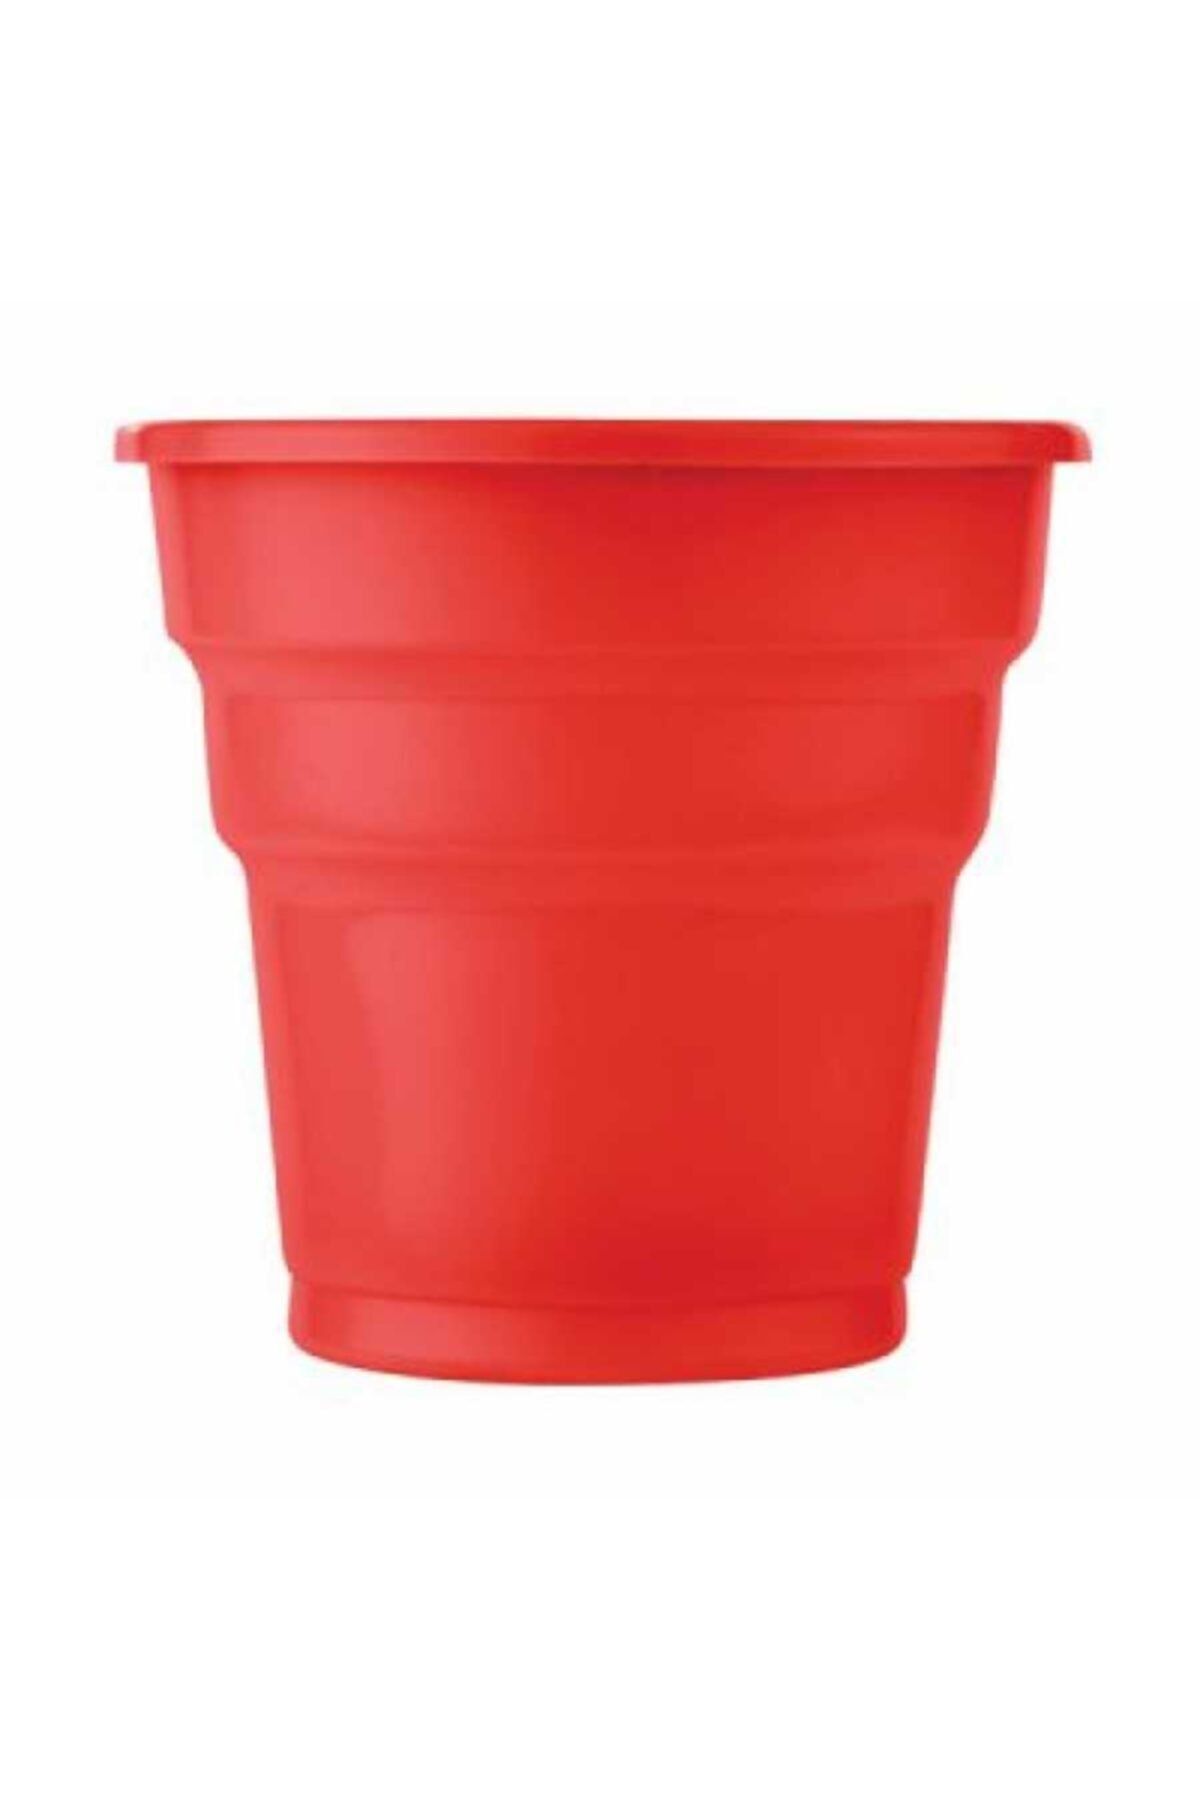 Aden Concept Plastik Meşrubat Bardağı Kırmızı Renk 180cc-7oz 25li